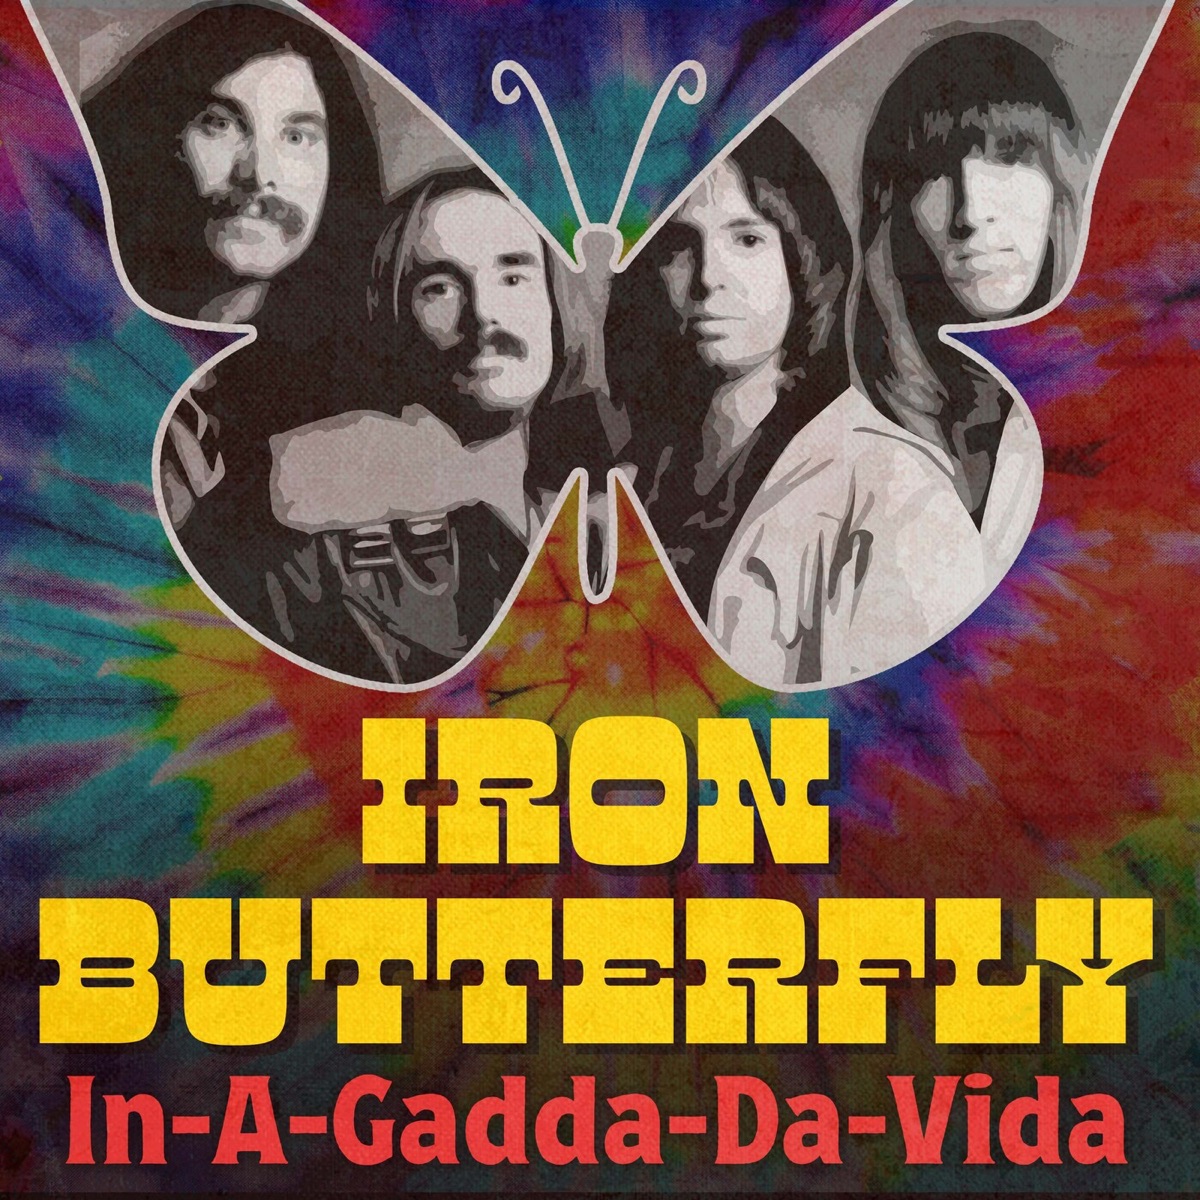 In-A-Gadda-Da-Vida - Album by Iron Butterfly - Apple Music